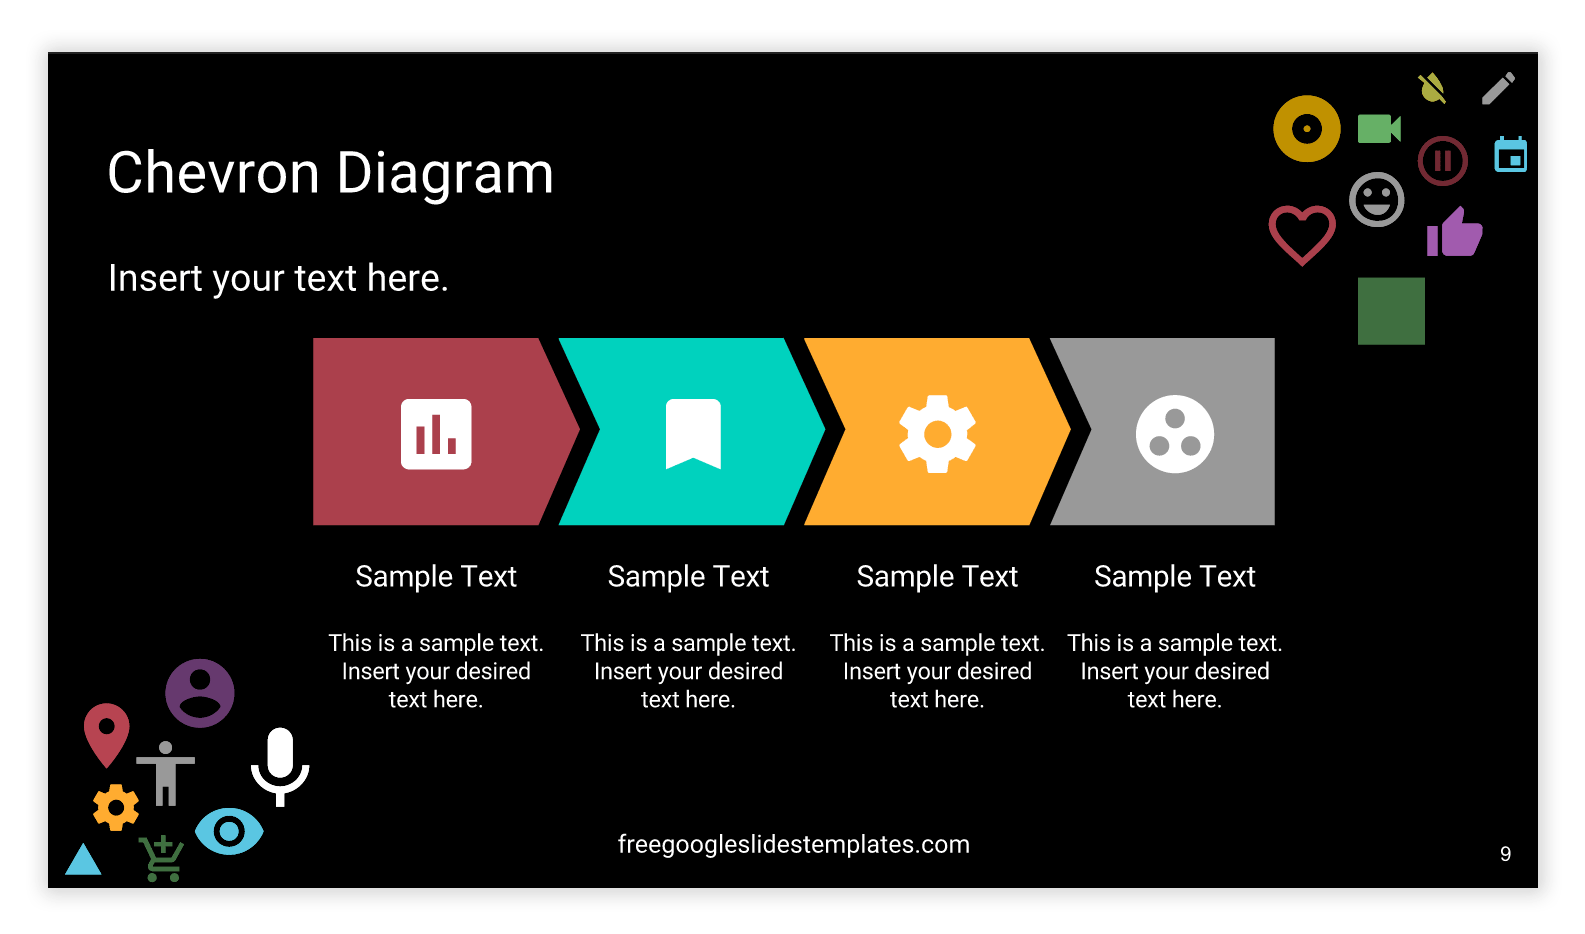 50-free-google-slides-templates-designs-for-presentations